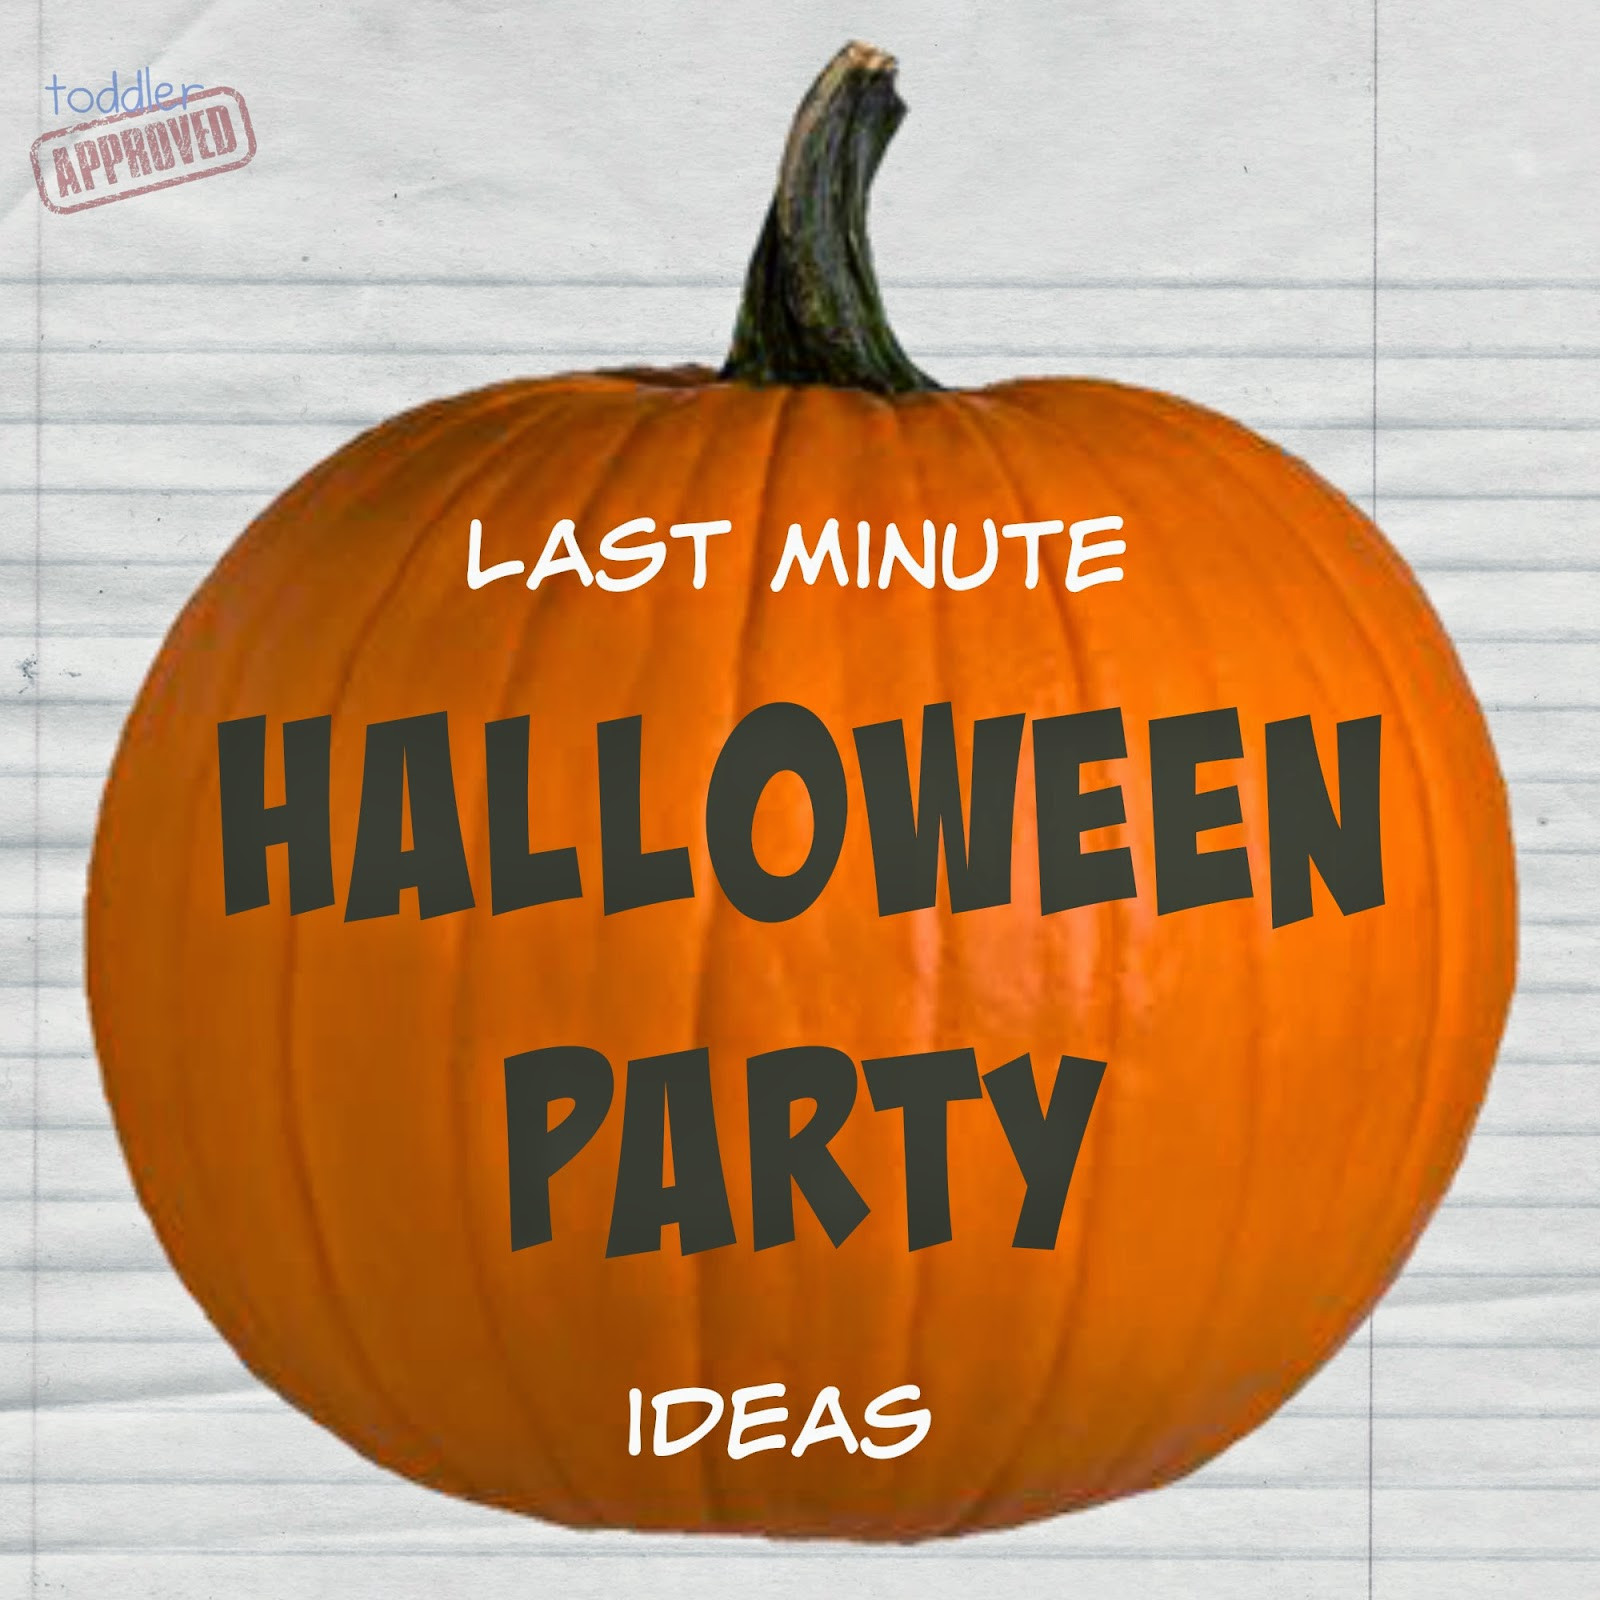 Halloween Party Activity Ideas
 Toddler Approved Last Minute Halloween Party Ideas